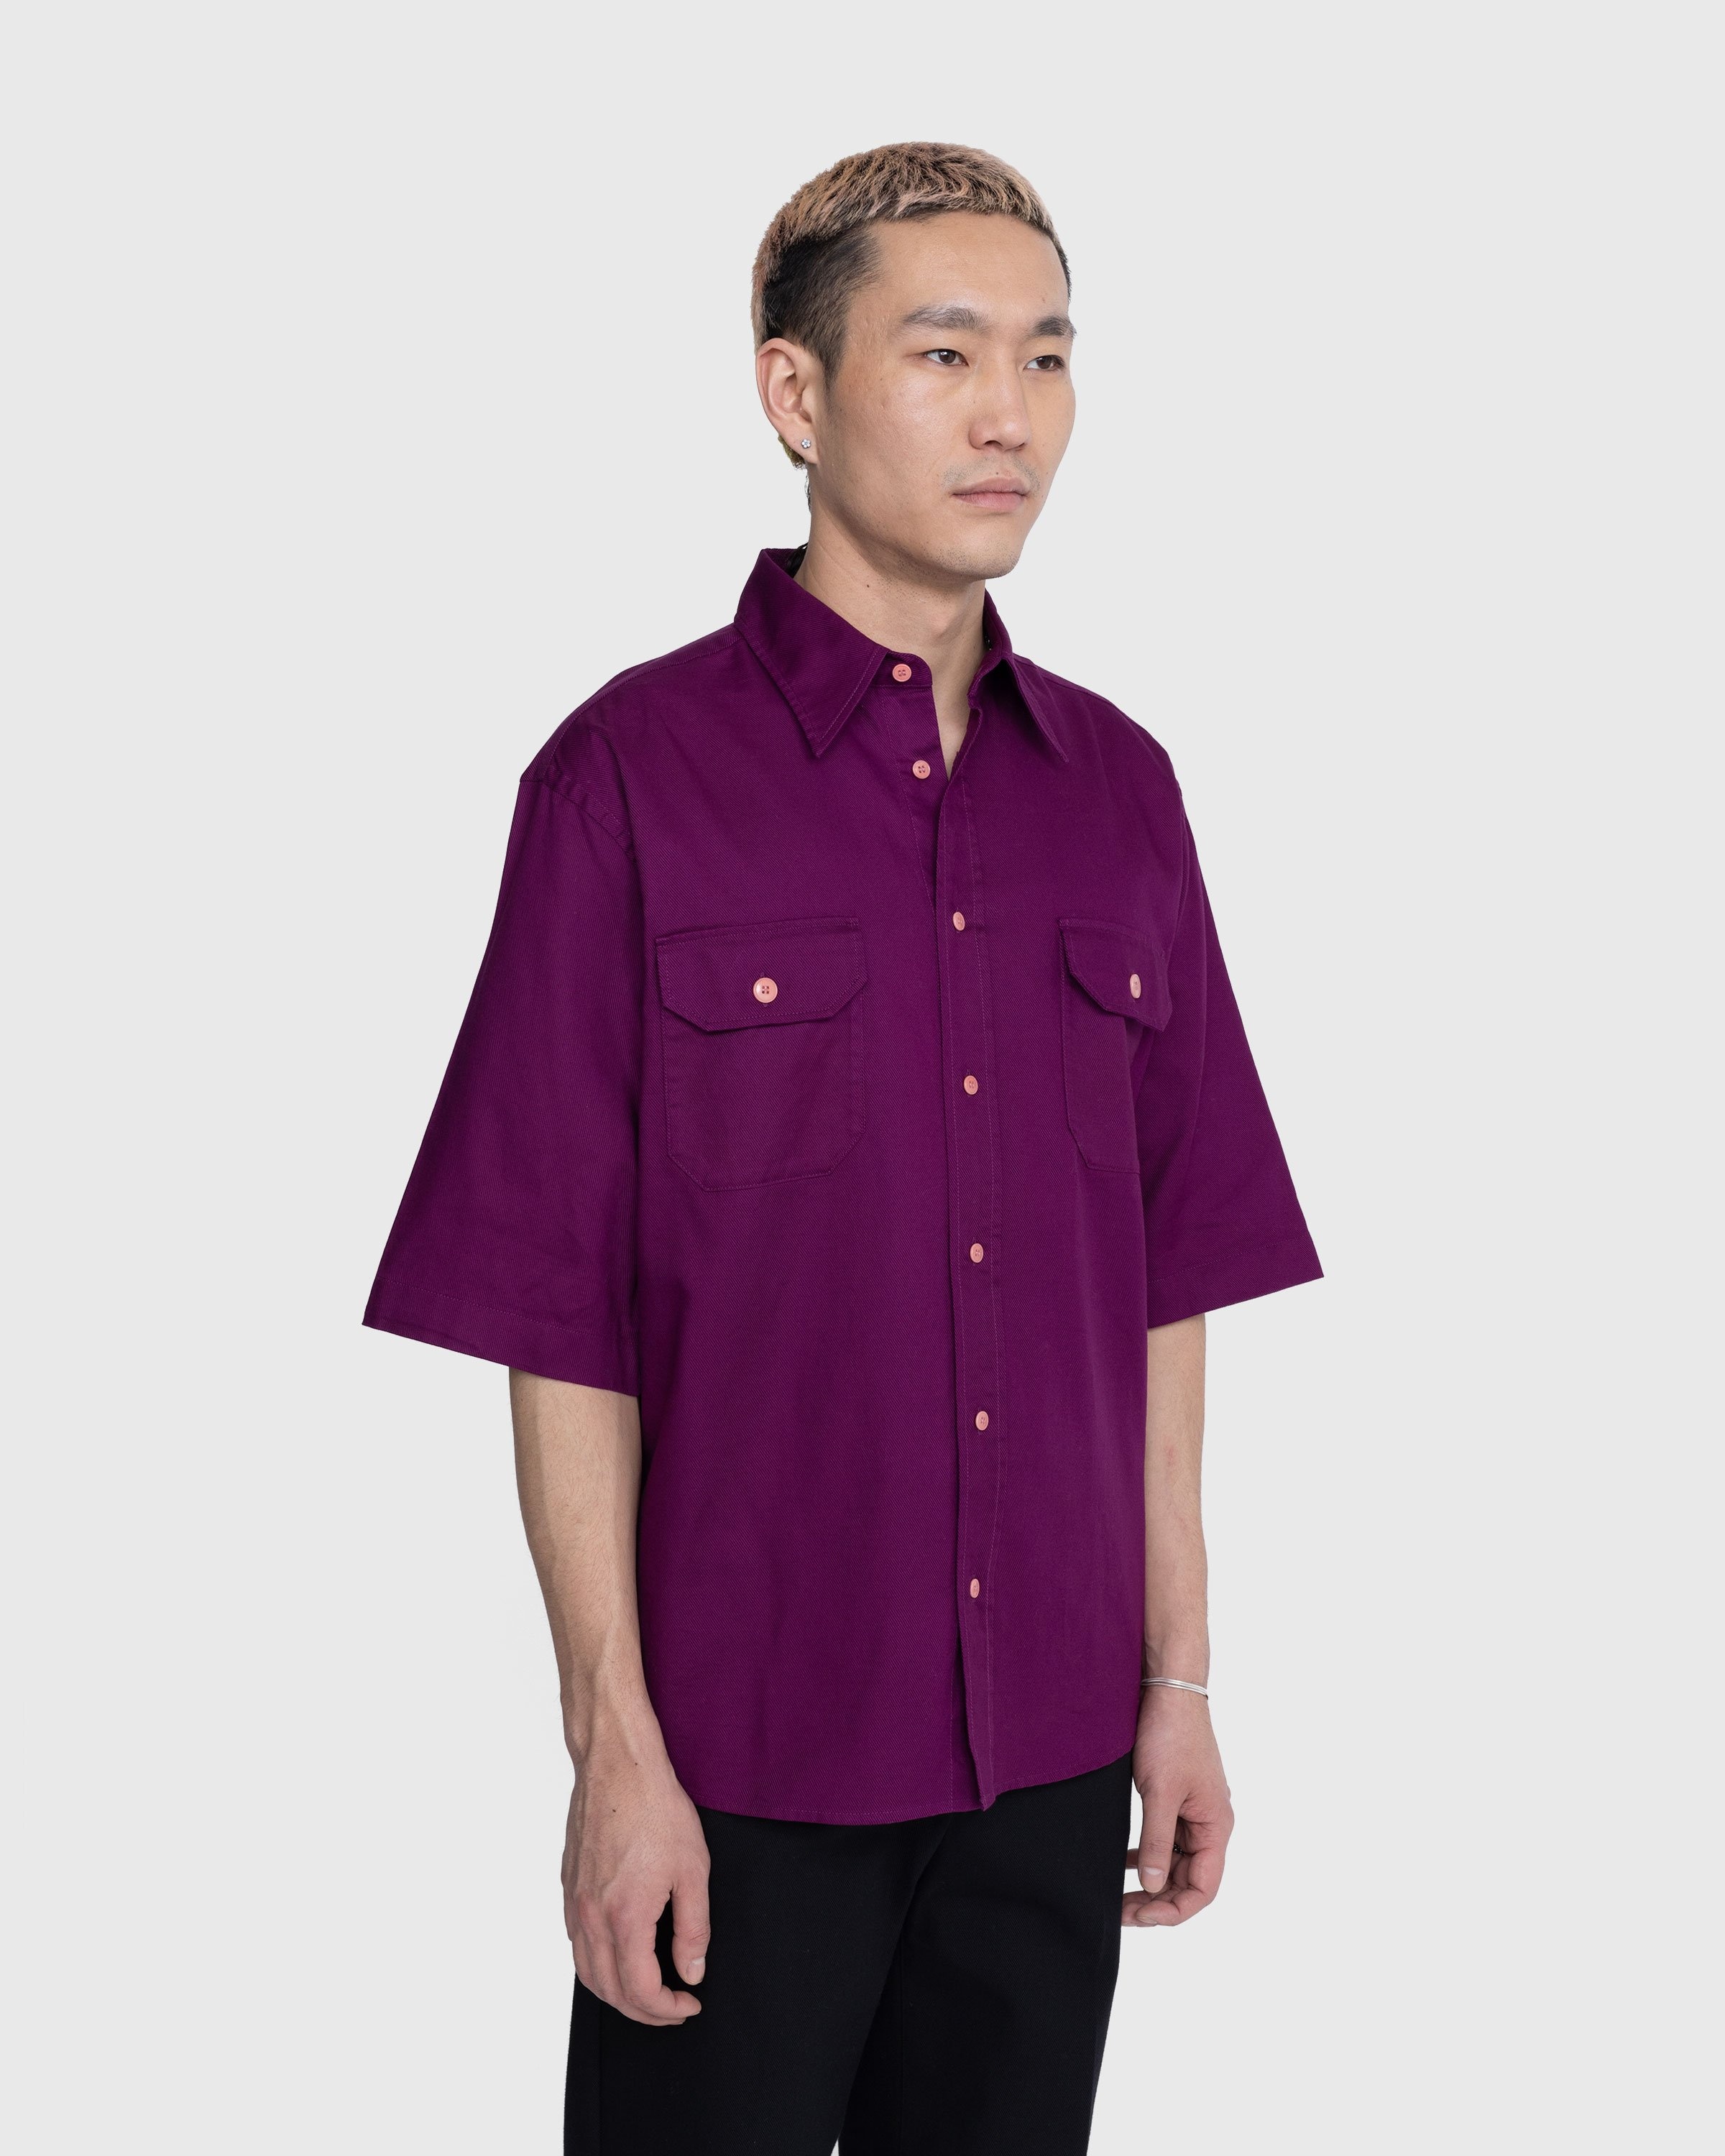 Acne Studios – Short-Sleeve Button-Up Shirt Purple | Highsnobiety Shop